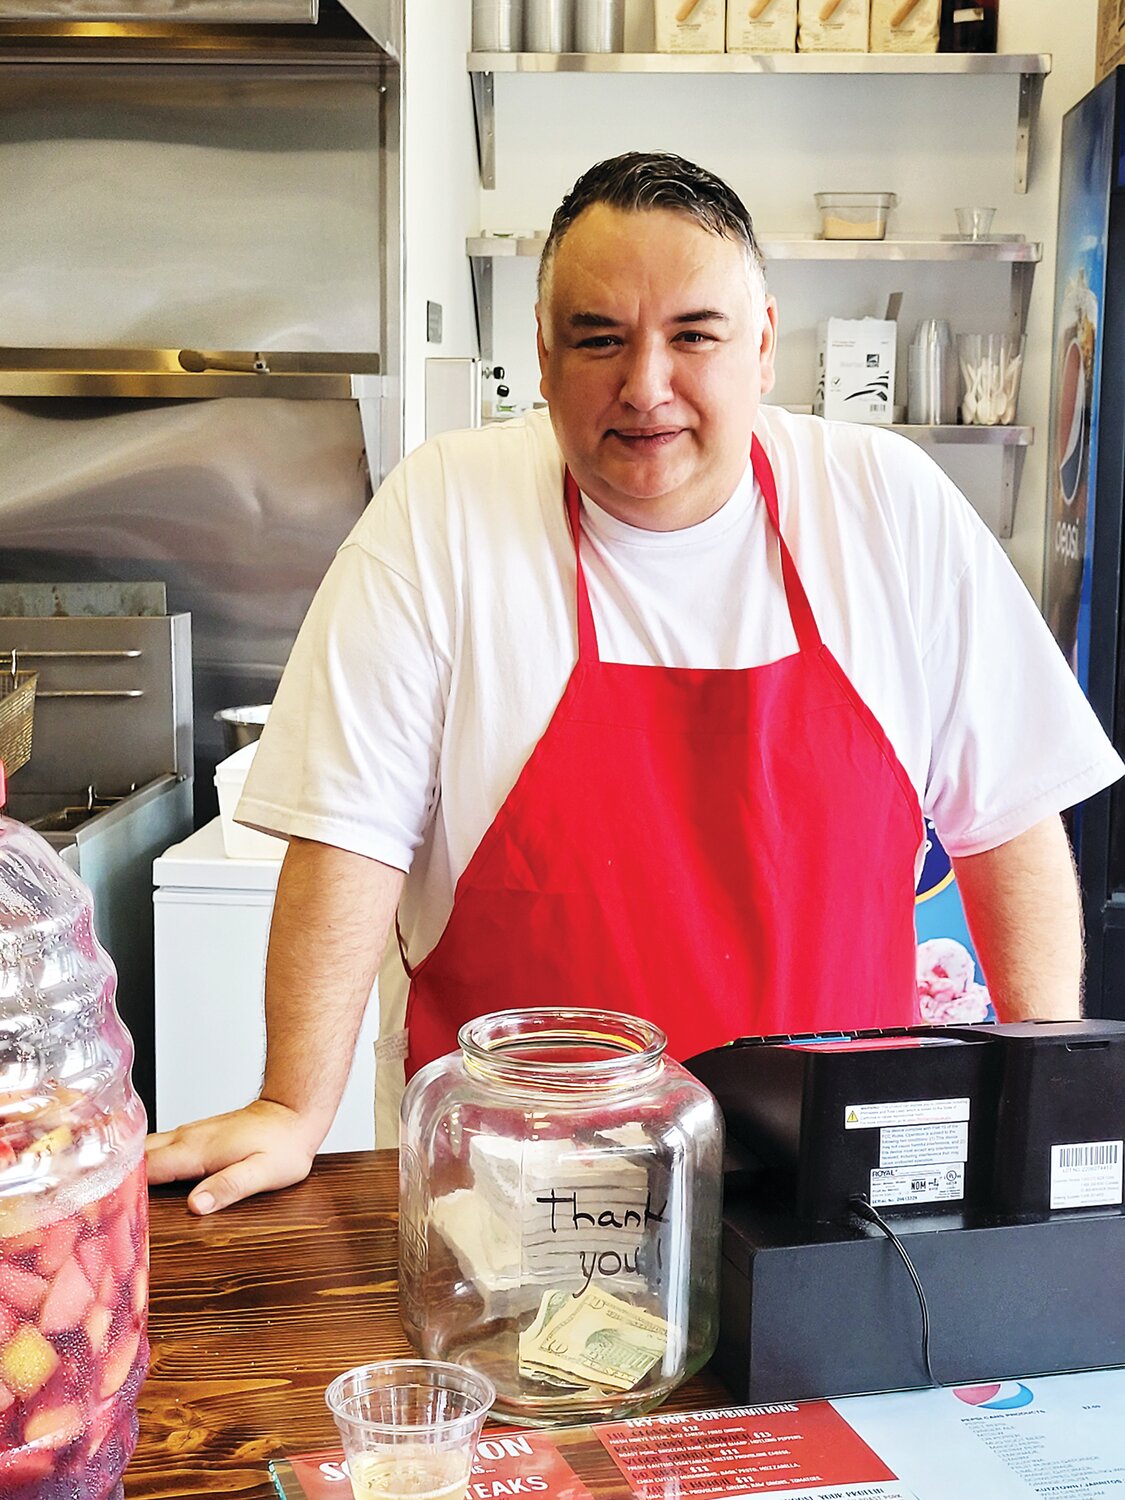 Joseph “Joe” Chiaro and his family have been running restaurants in Souderton since 2004. Joe Chiaro’s latest endeavor is Peppe’s Steaks on North Main Street.